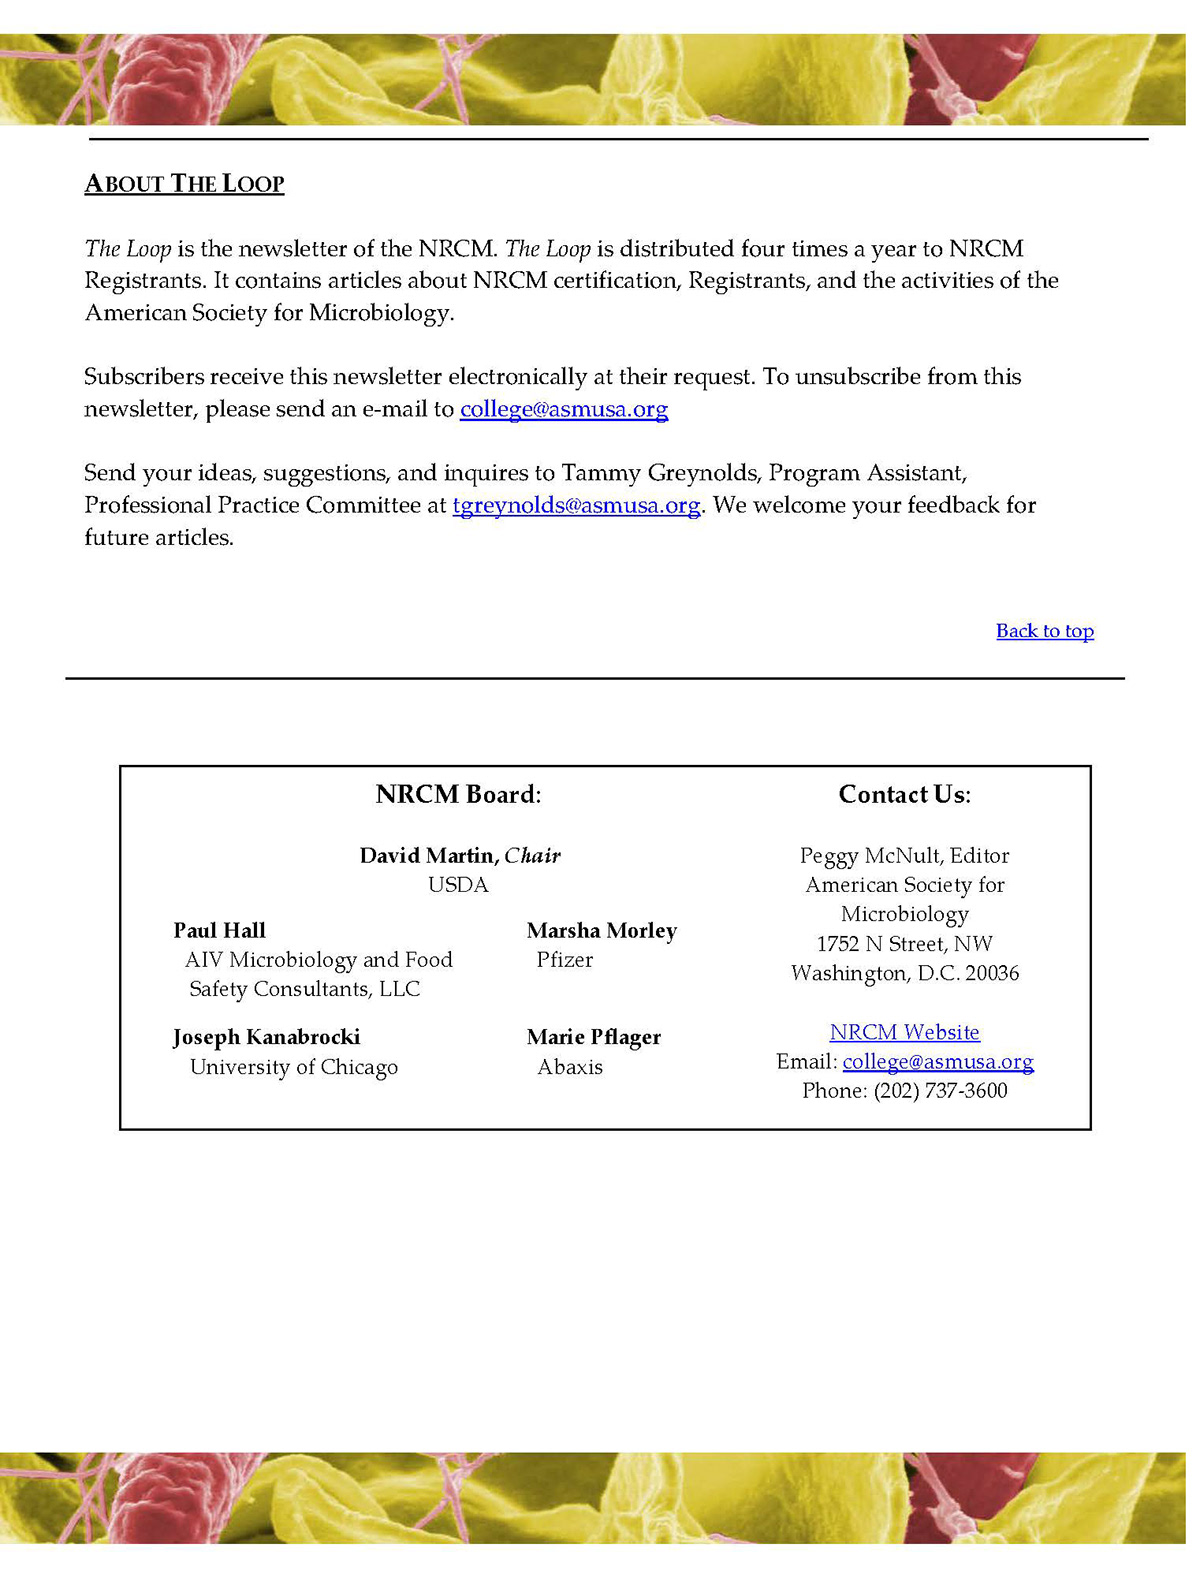 newsletter the loop NRCM Registrants program promotions